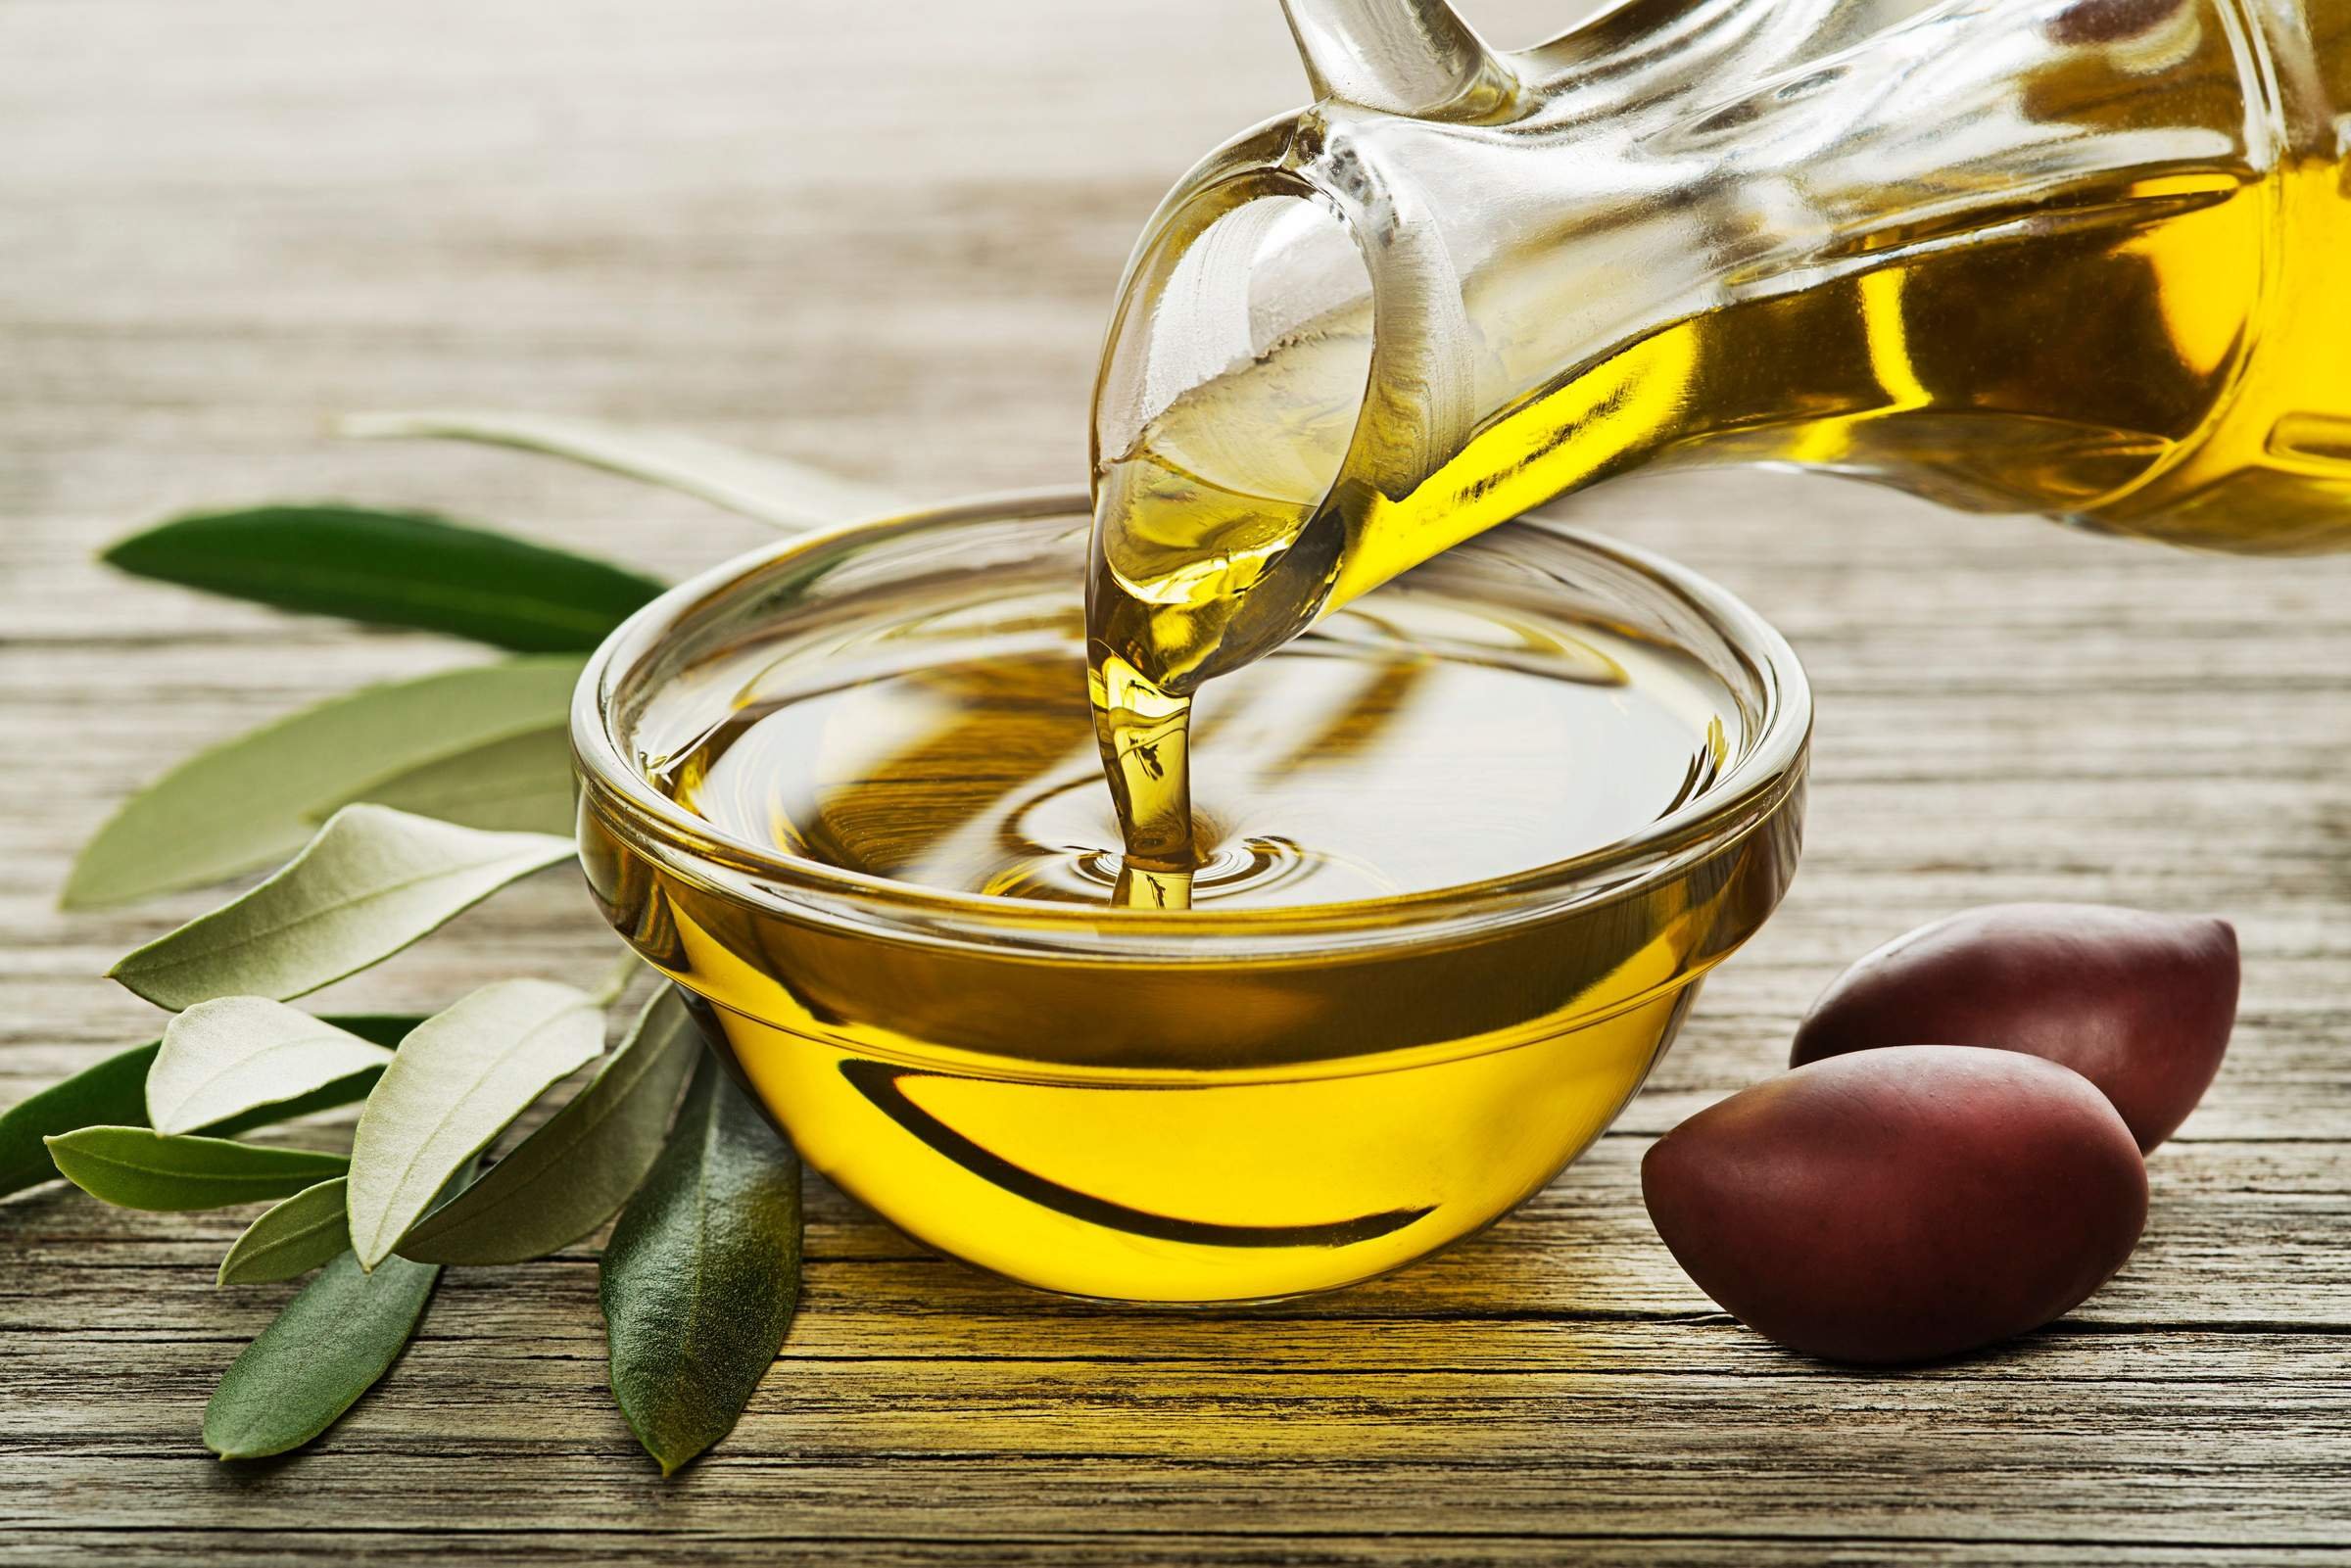 A bottle of olive oil. Оливковое масло. Растительное масло. Масло растительное олива. Разлитое оливковое масло.